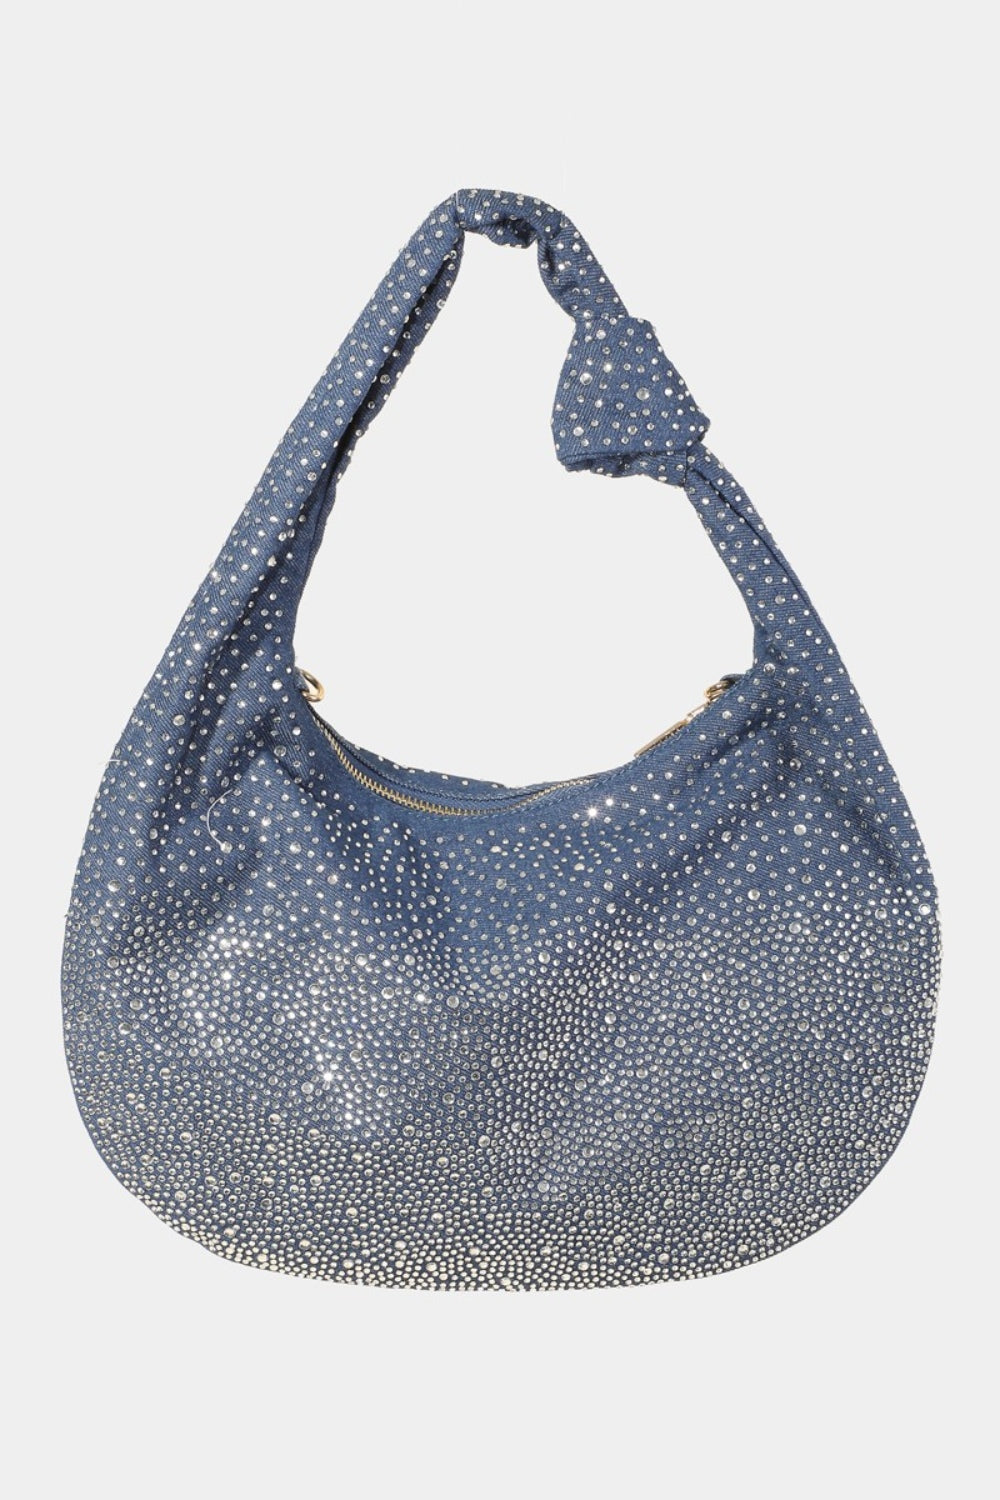 Fame Rhinestone Studded Handbag apparel & accessories